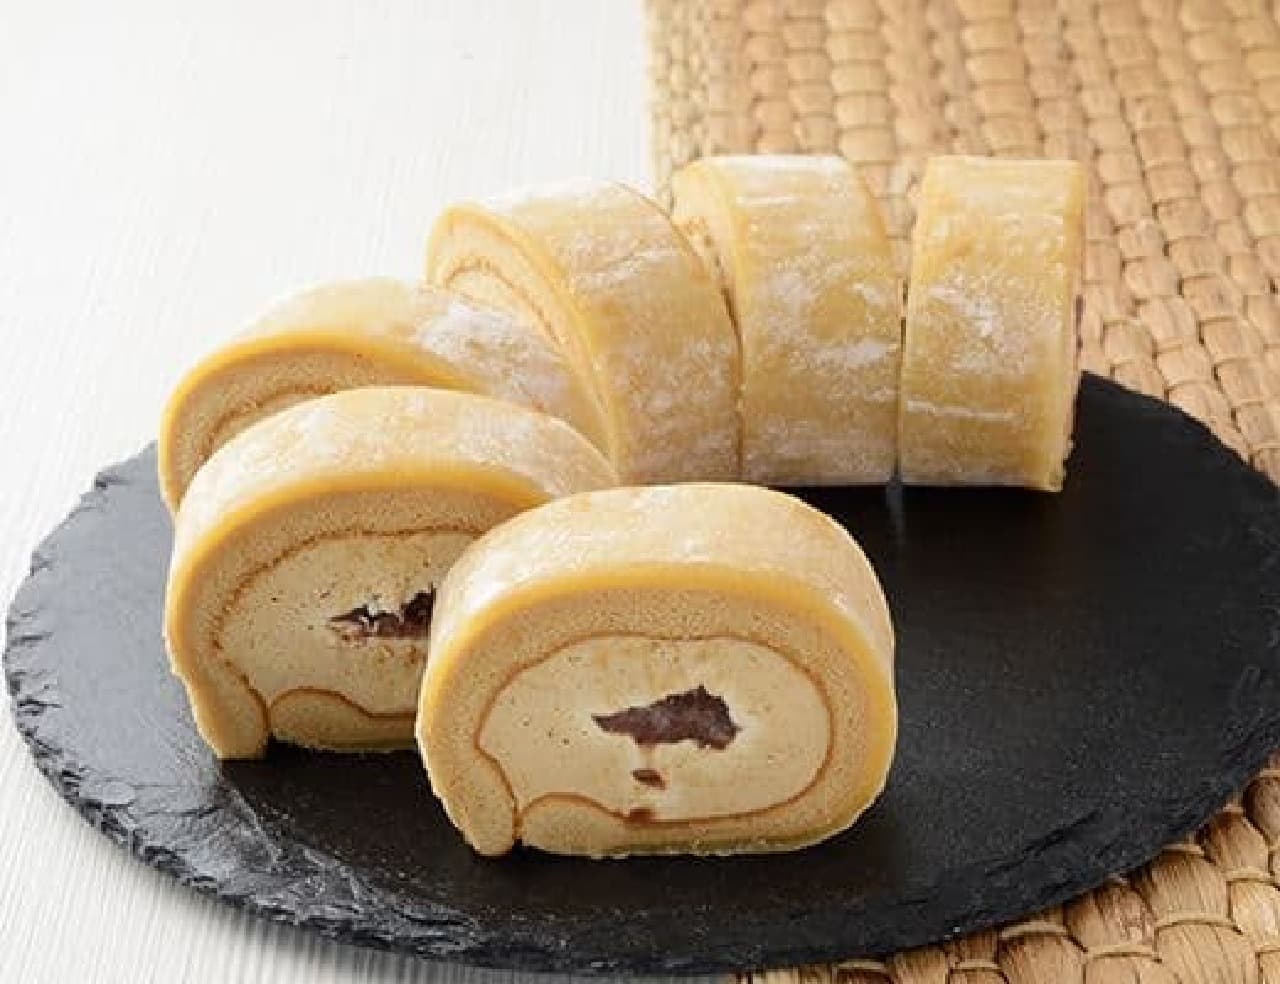 Lawson "Mochi texture rolls made with kinako mochi